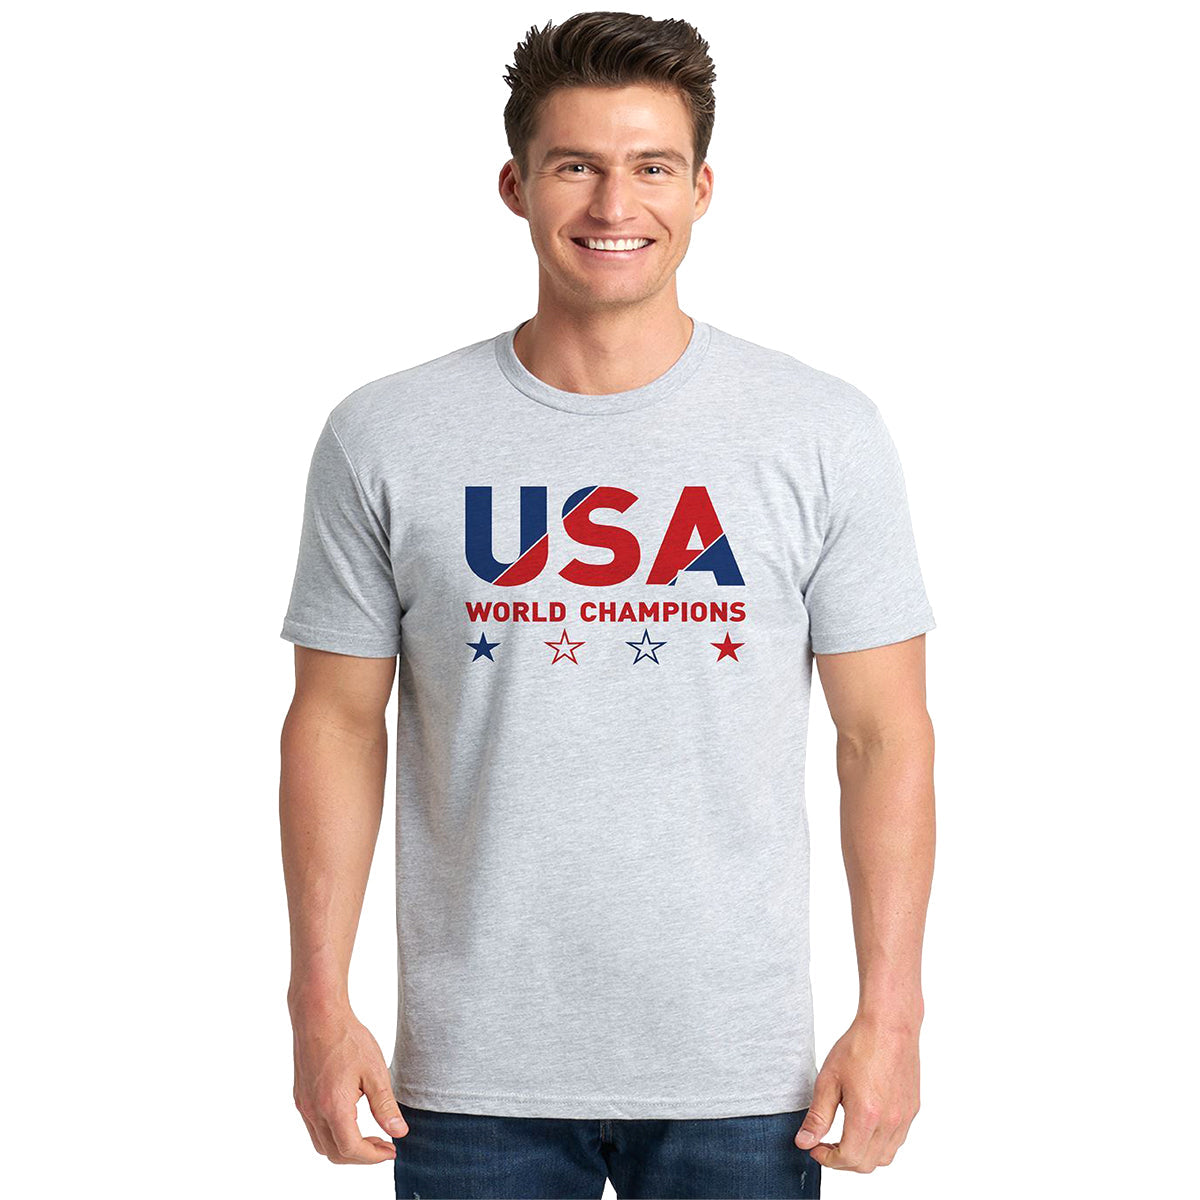 USA World Cup 2019 Champions Shirt T-shirts 411 Youth Medium Ash Youth